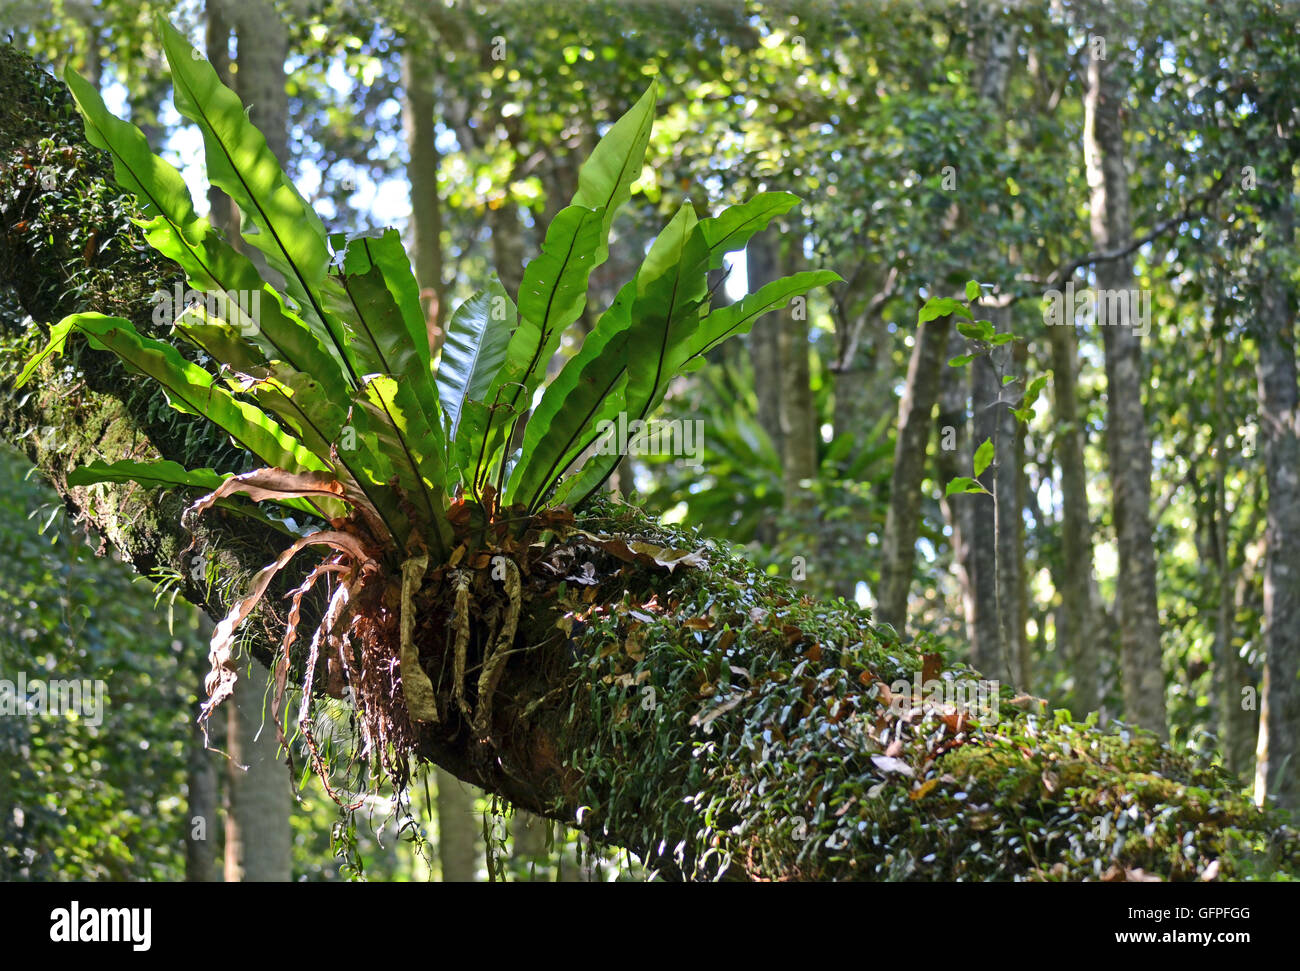 Australian Birdsnest Fern (Asplenium australasicum) growing on a tree in the eastern Australian rainforest. Stock Photo